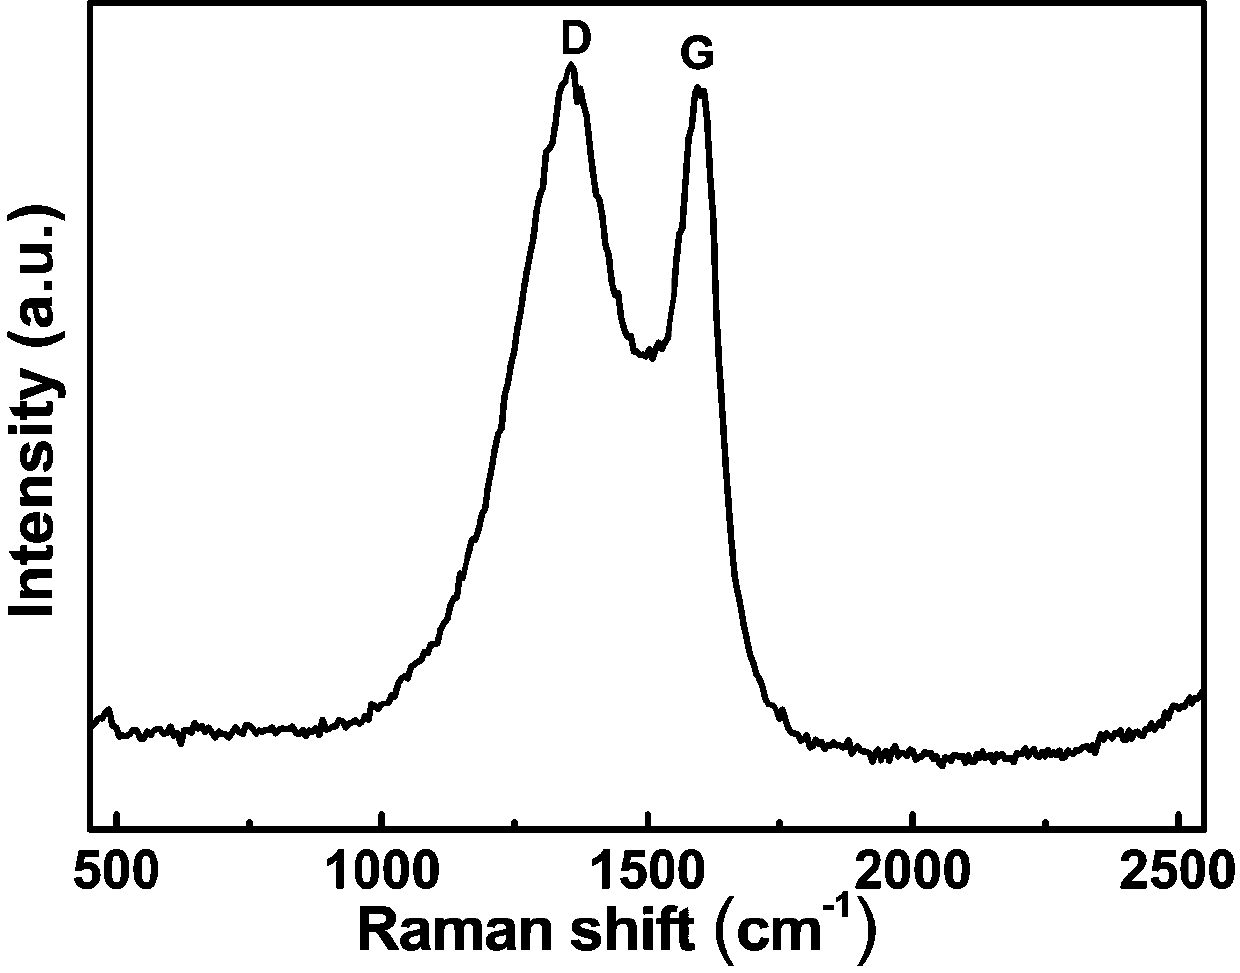 Preparation method of amino phenolic resin-based pyrrole nitrogen-doped carbon electrode material